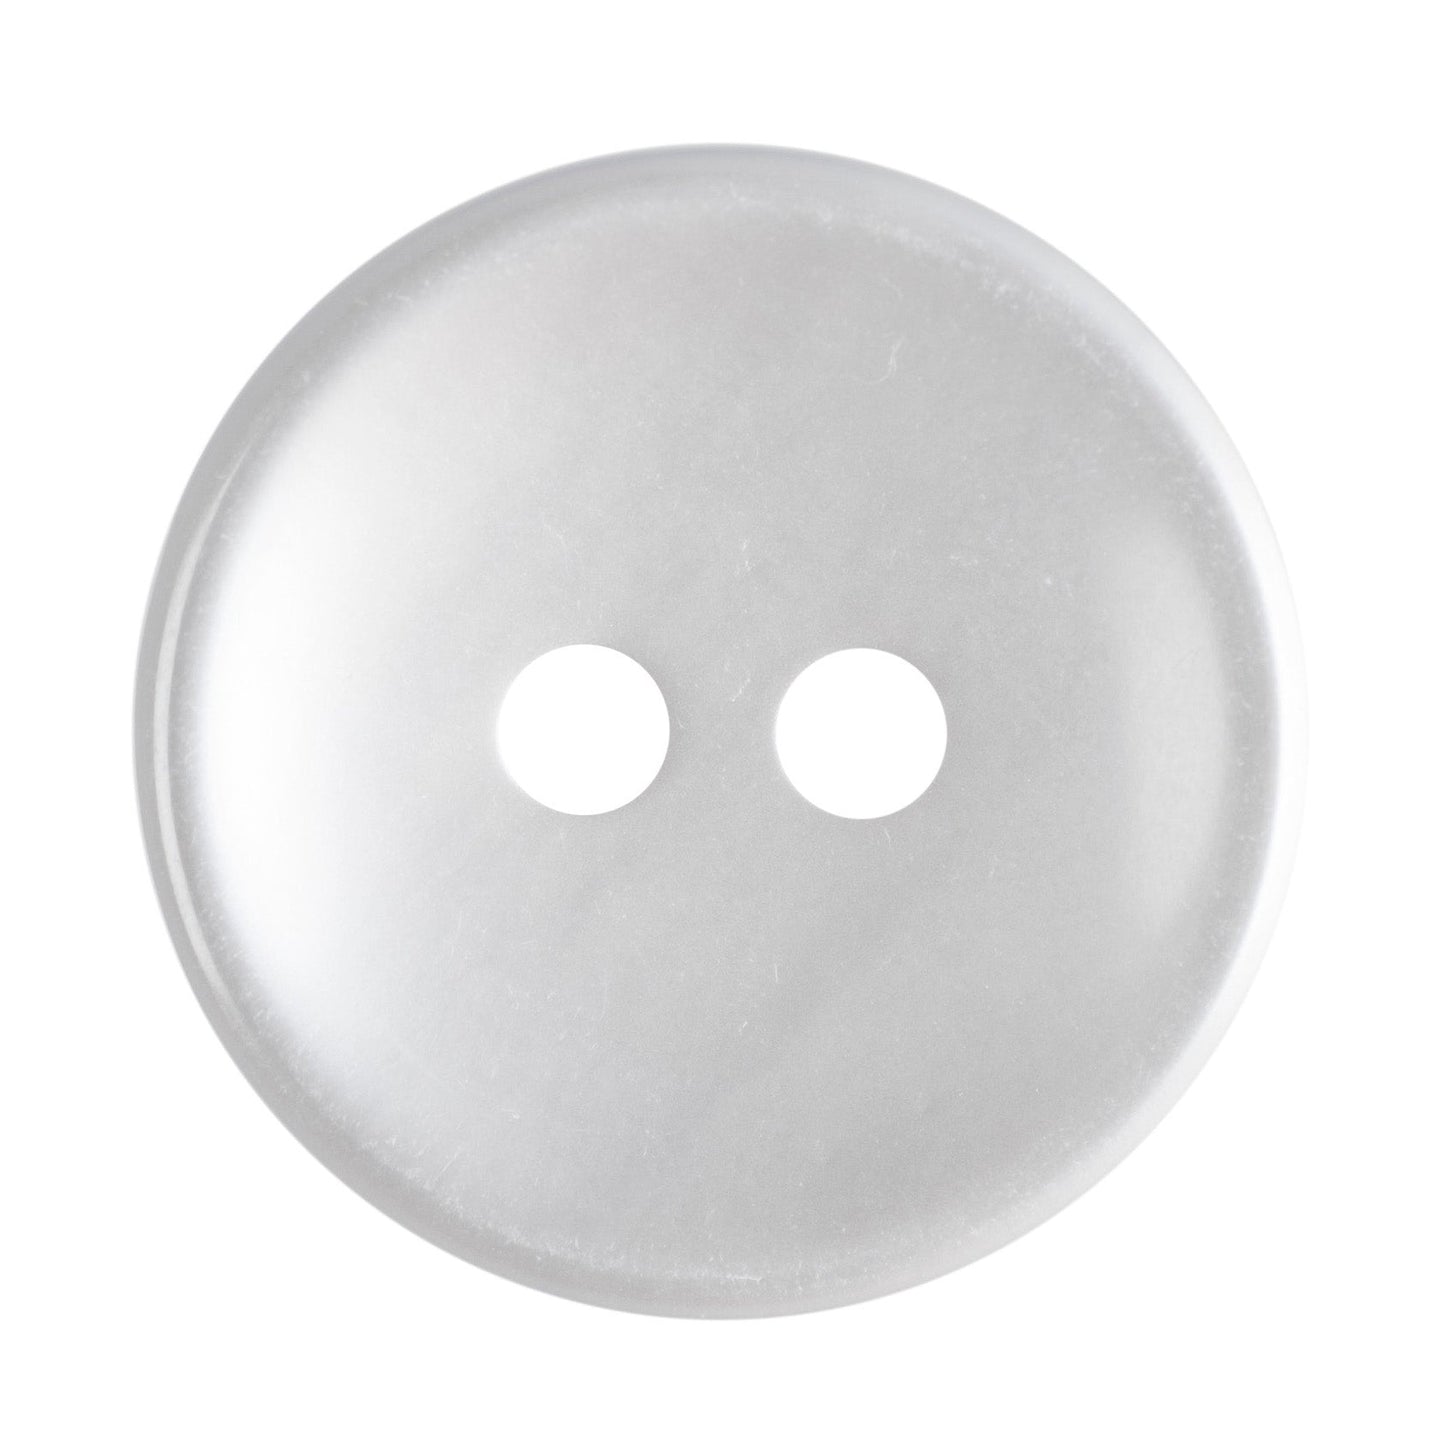 2 Hole Shirt Button - 19mm - Pearl White [LB35.8]